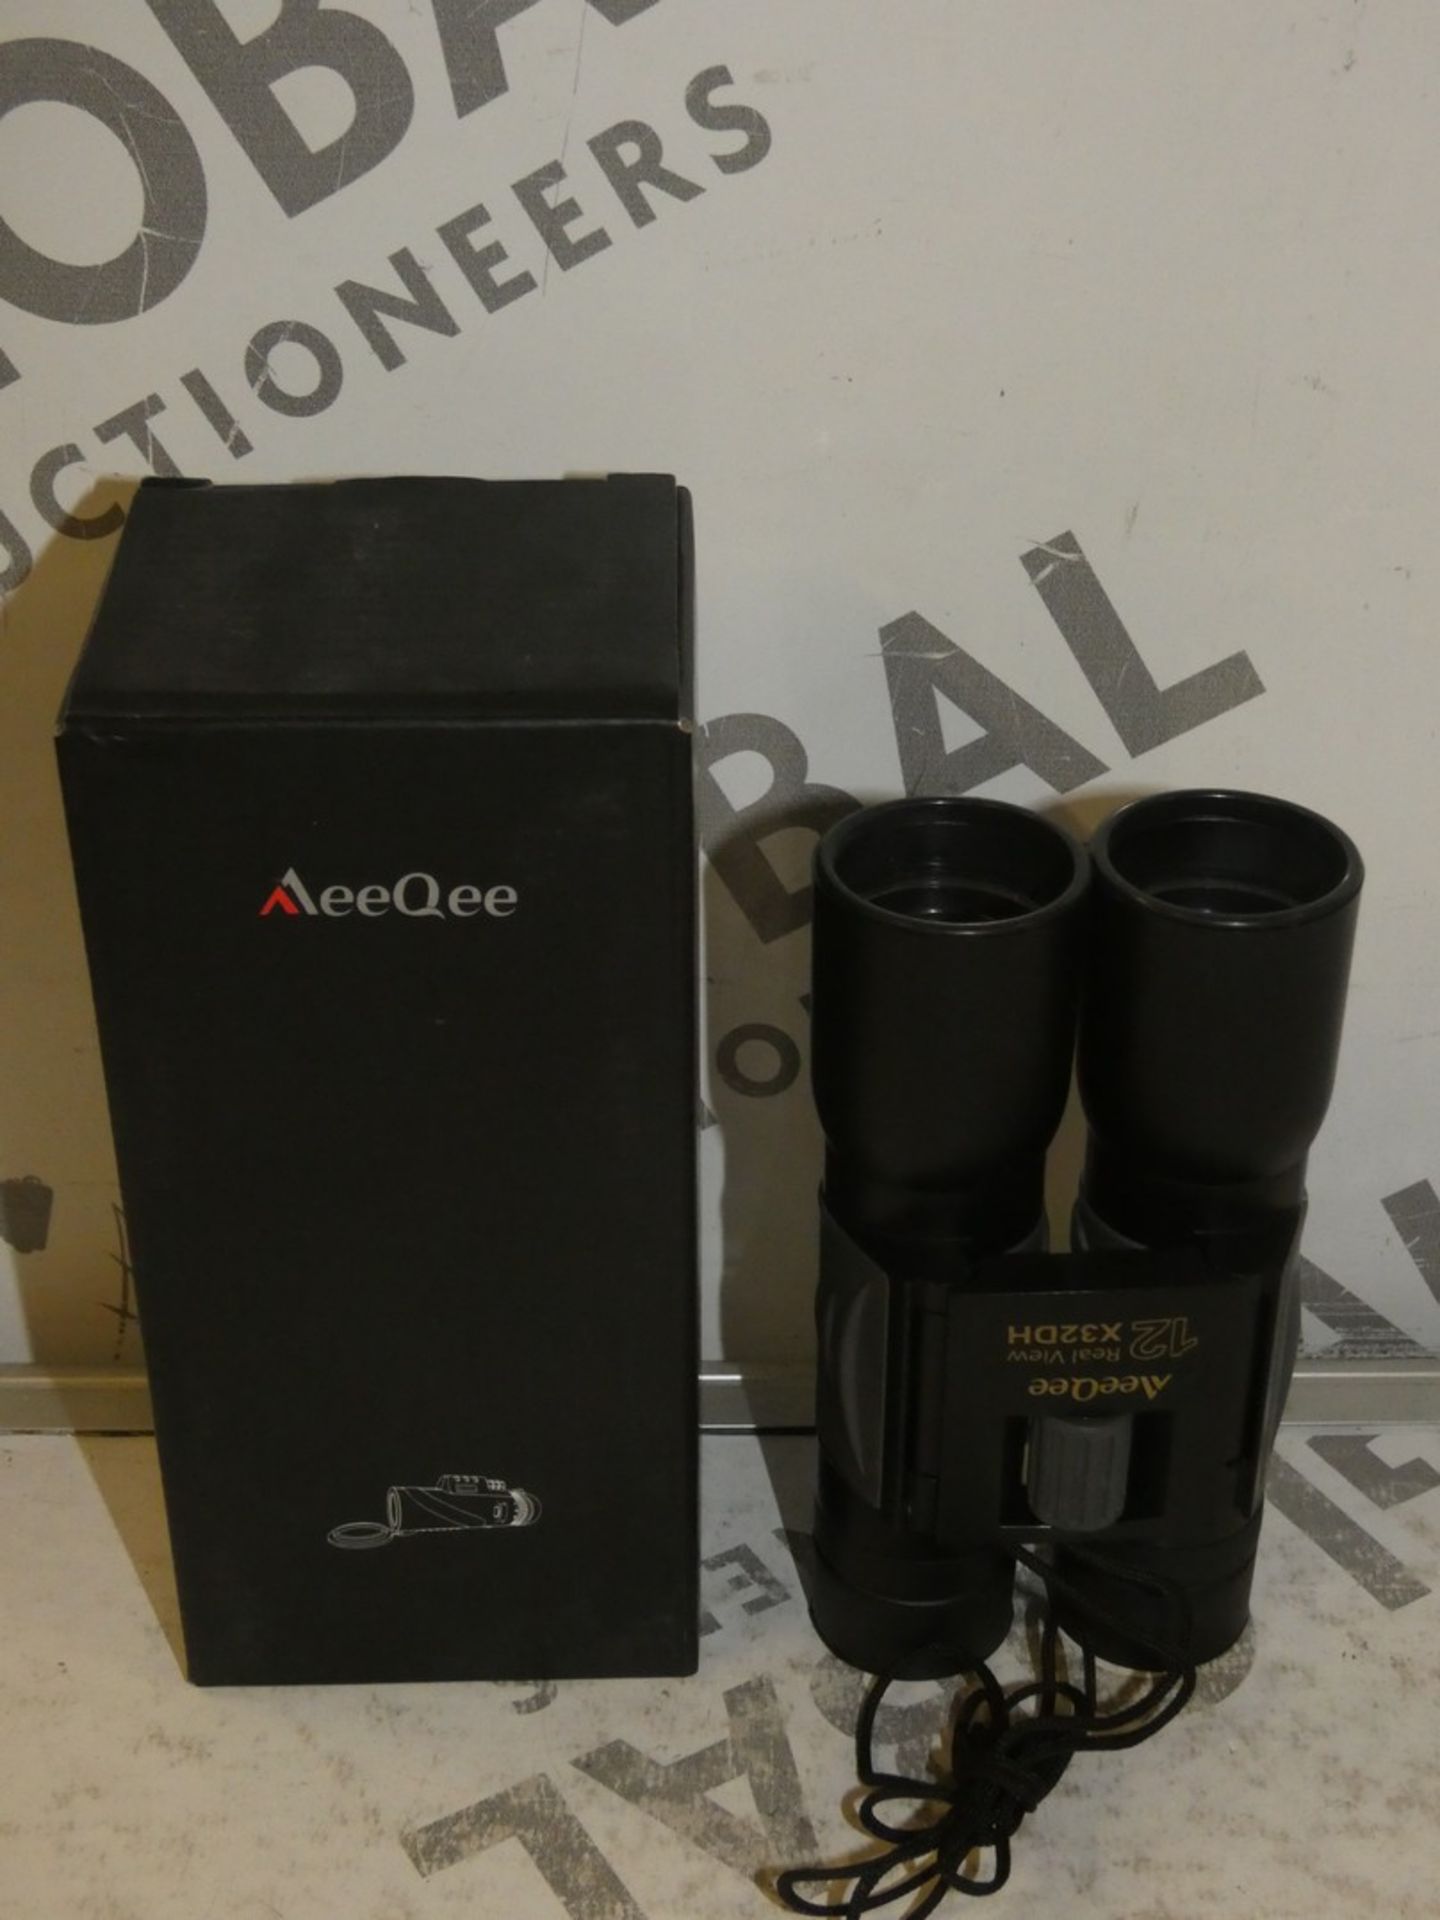 Boxed Brand New Aeeqee Compact Hiking Sport Hunting Binoculars RRP £25 Each